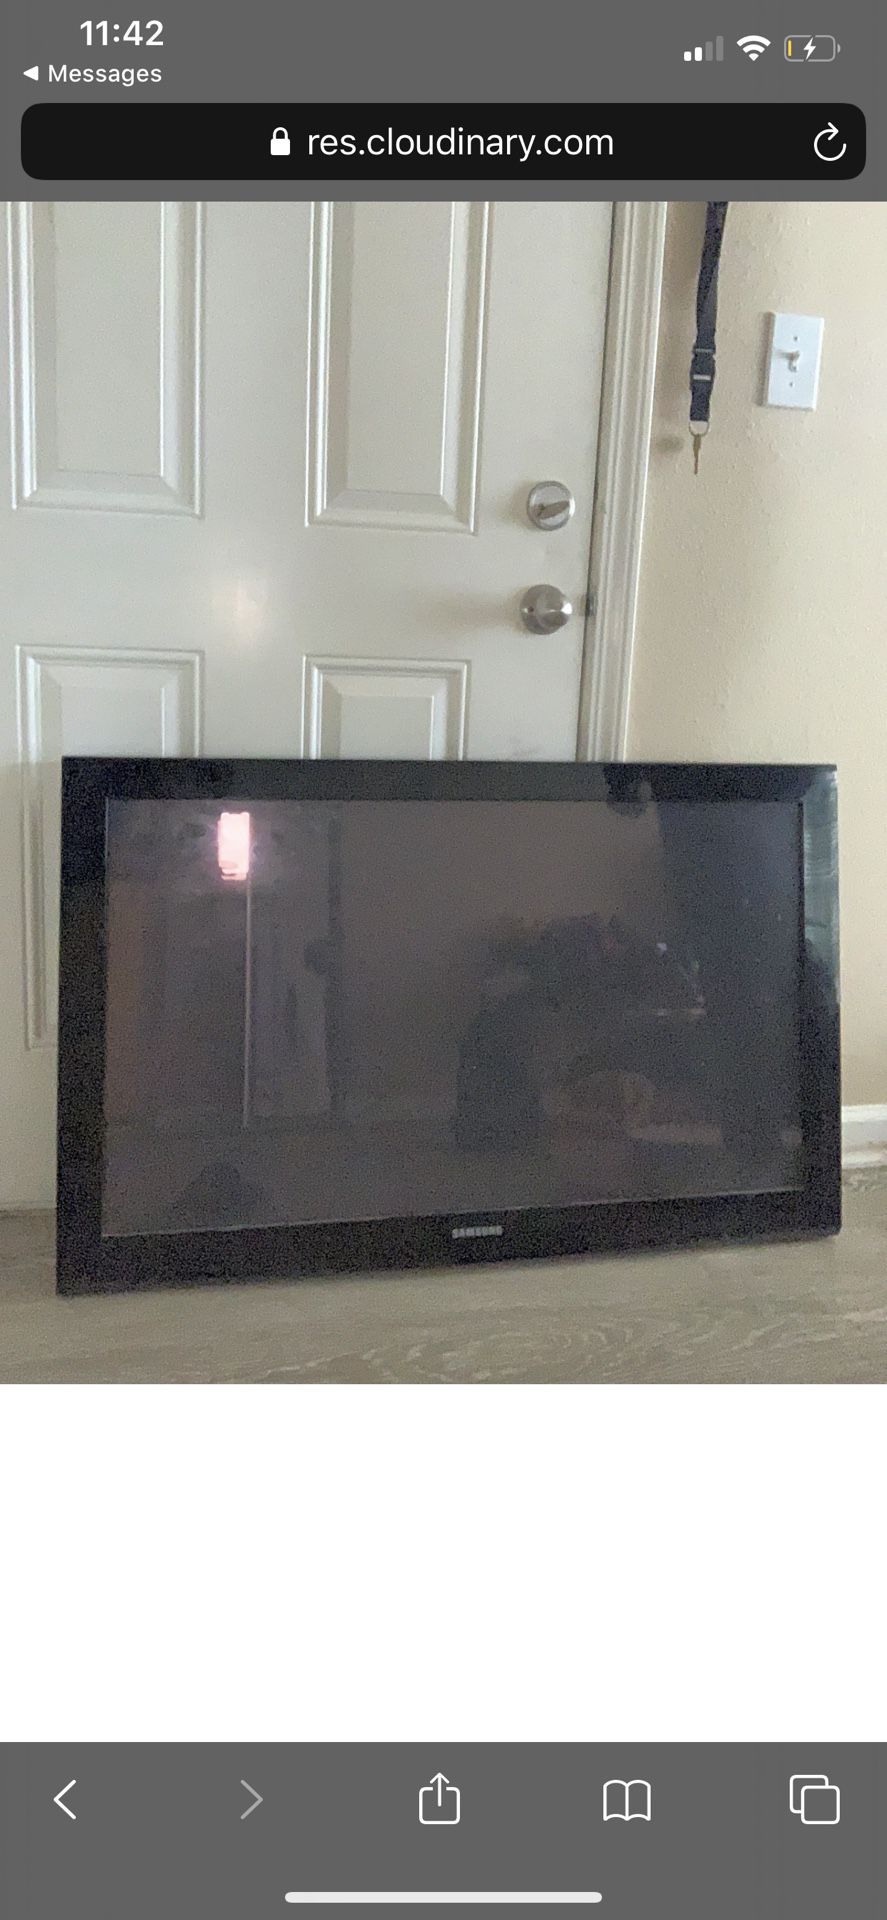 Large Samsung TV